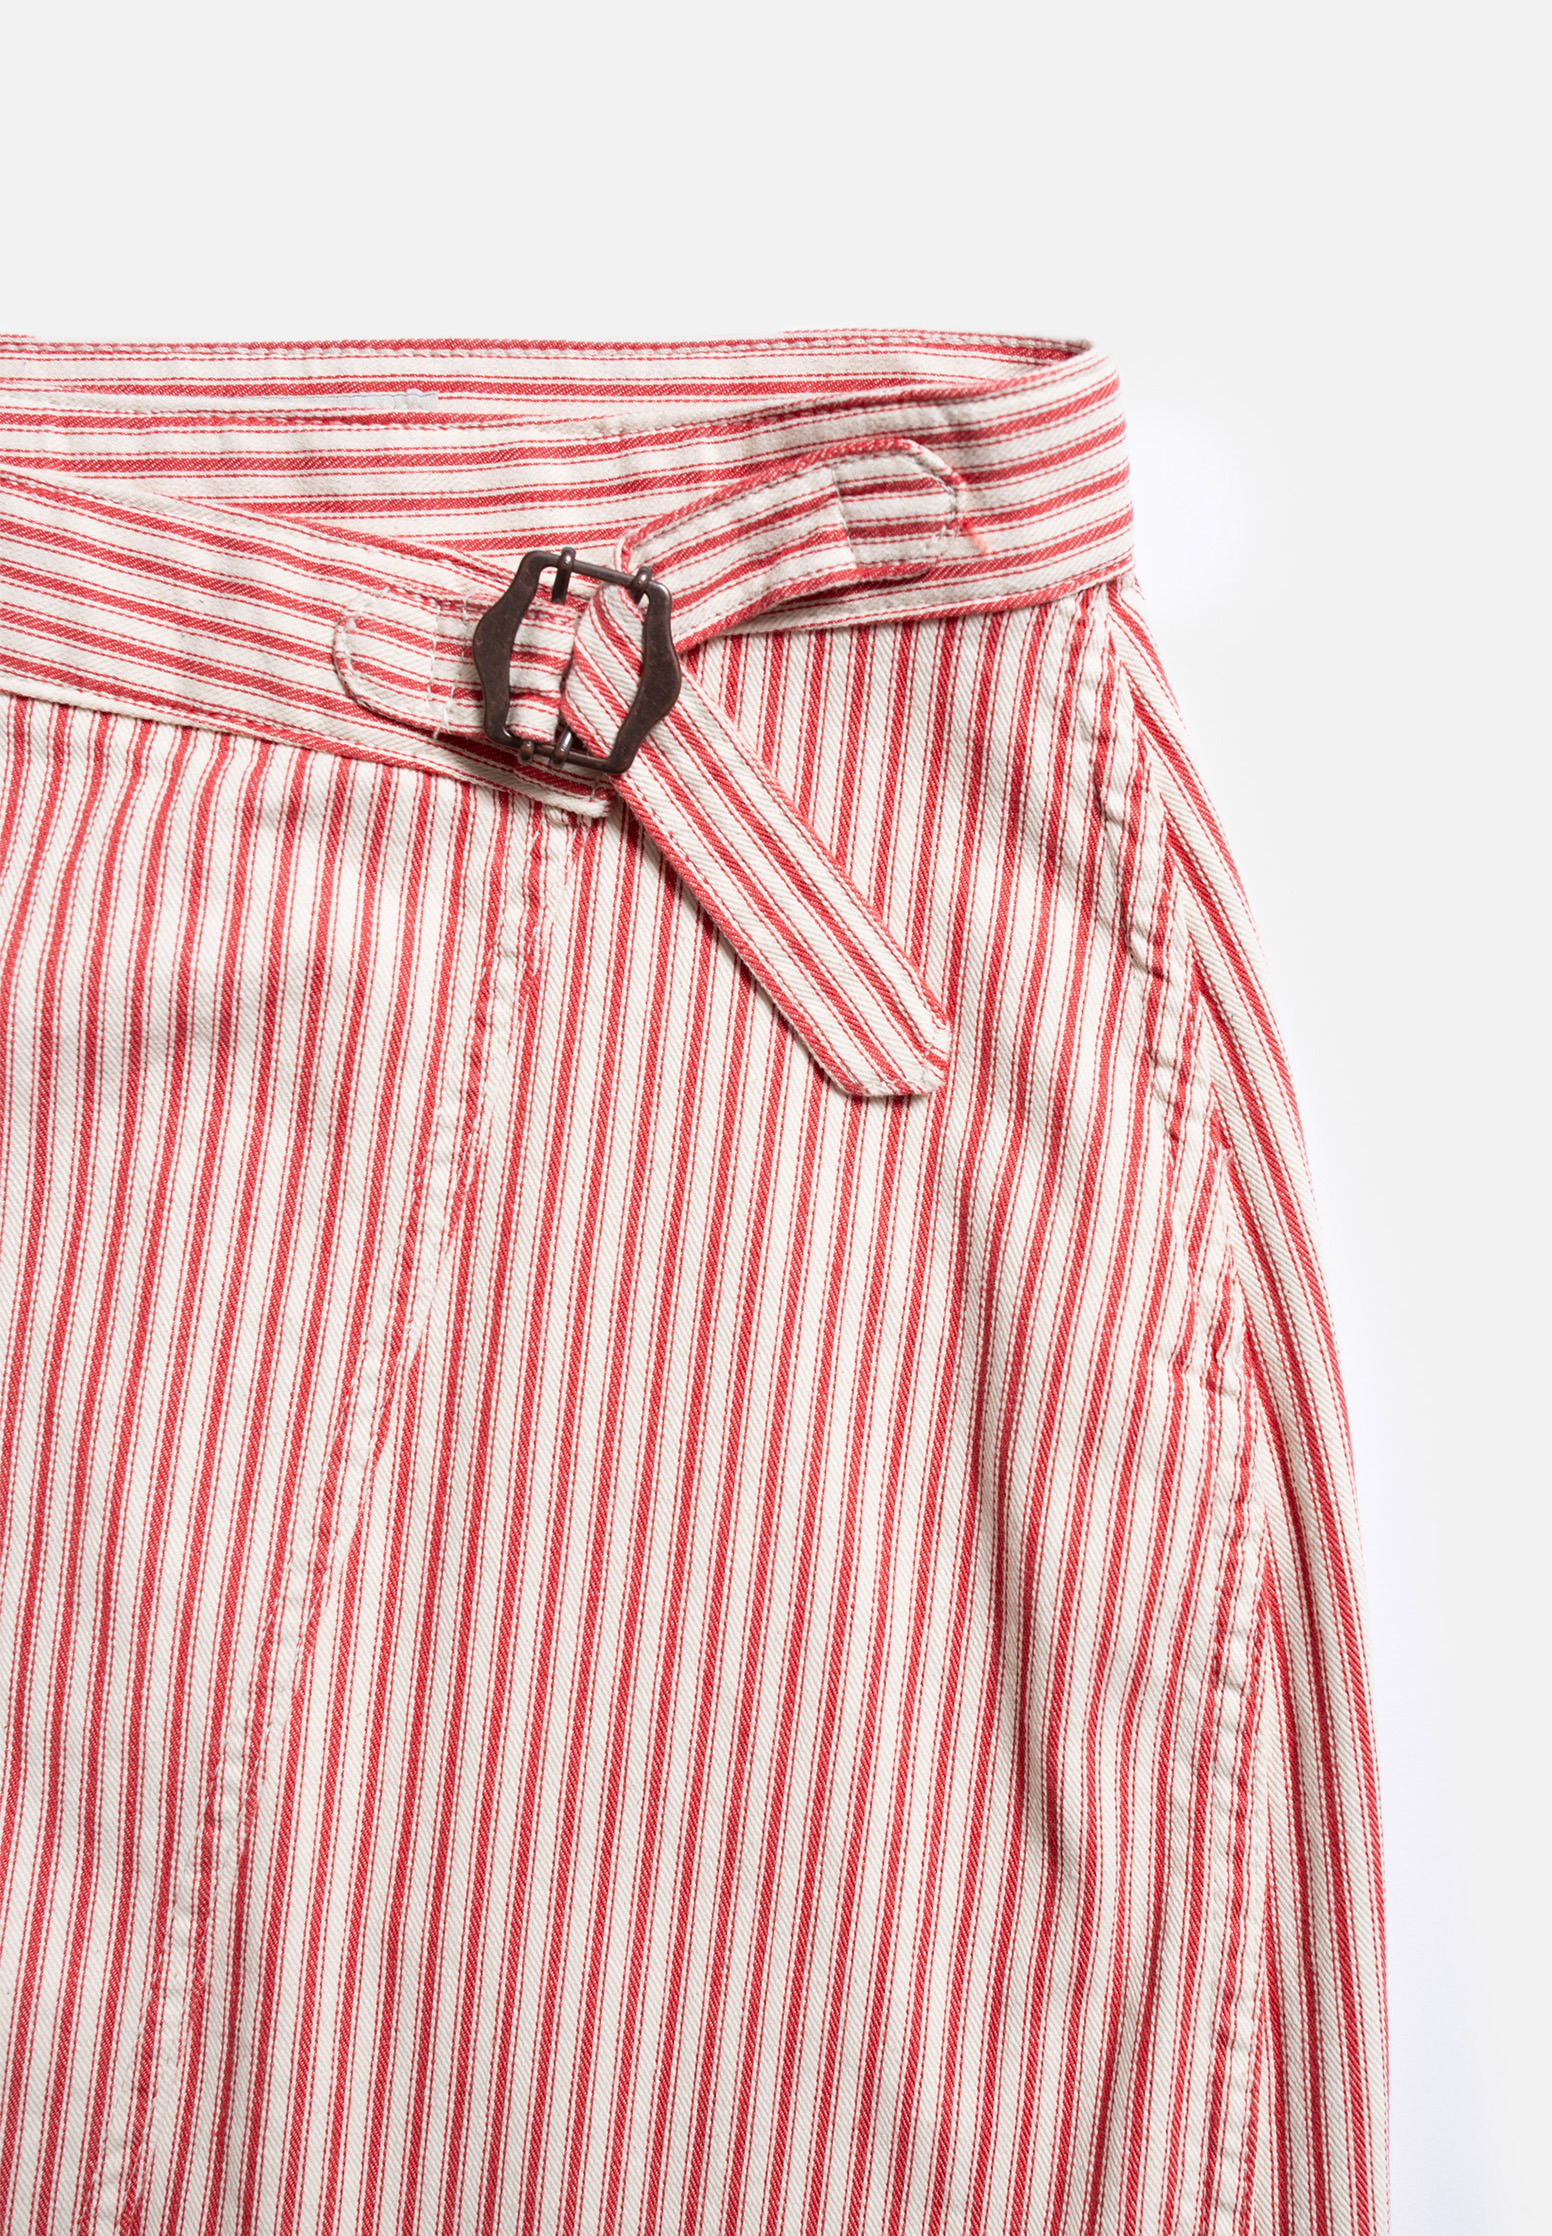 NUDIE JEANS Denim Skirt Irma Striped red/white S